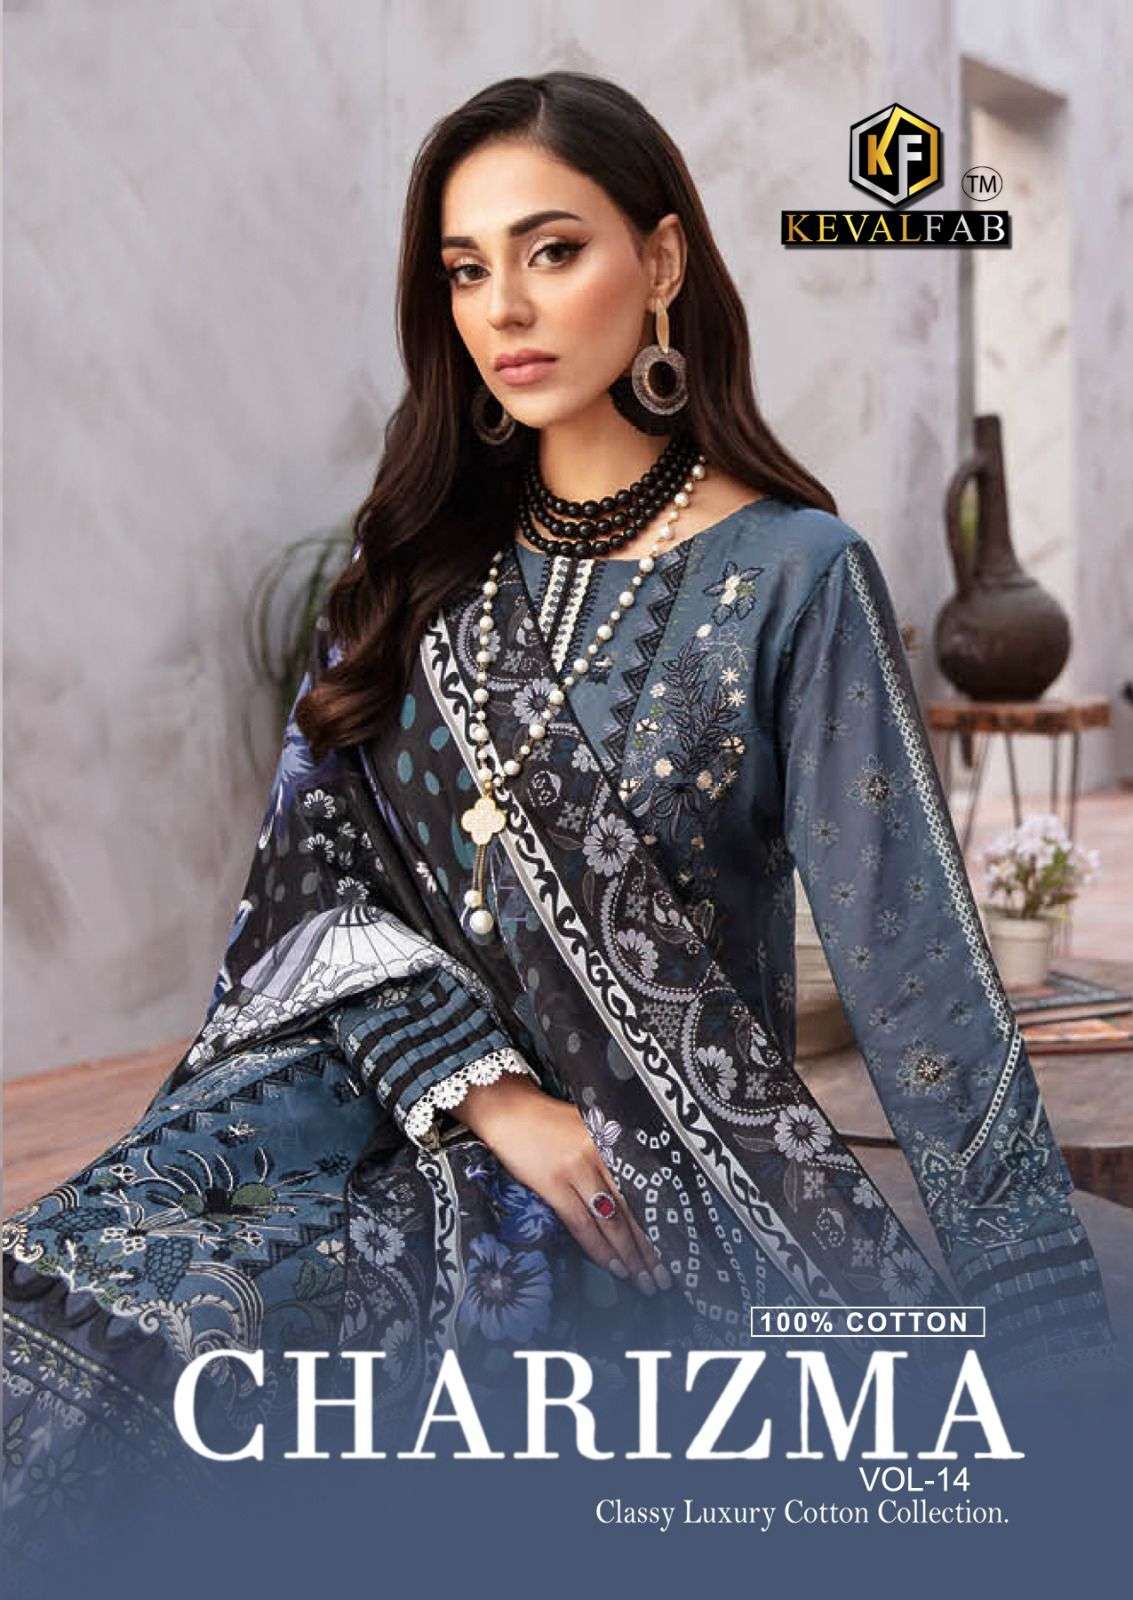 Keval Fab Charizma Vol 14 Classy Luxury Karachi Cotton Dress Dealers